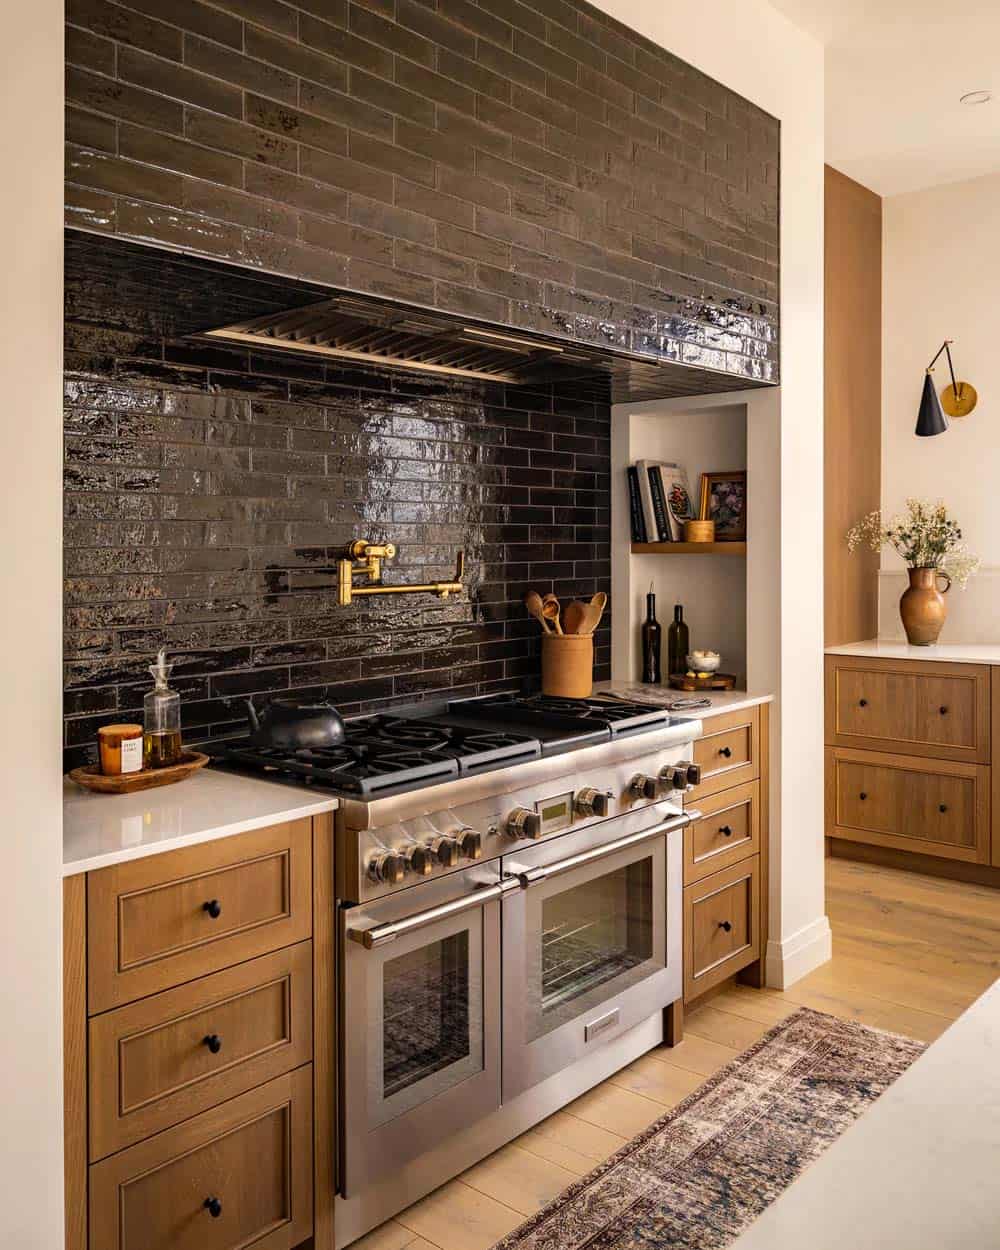 contemporary kitchen with black backsplash tile above the range